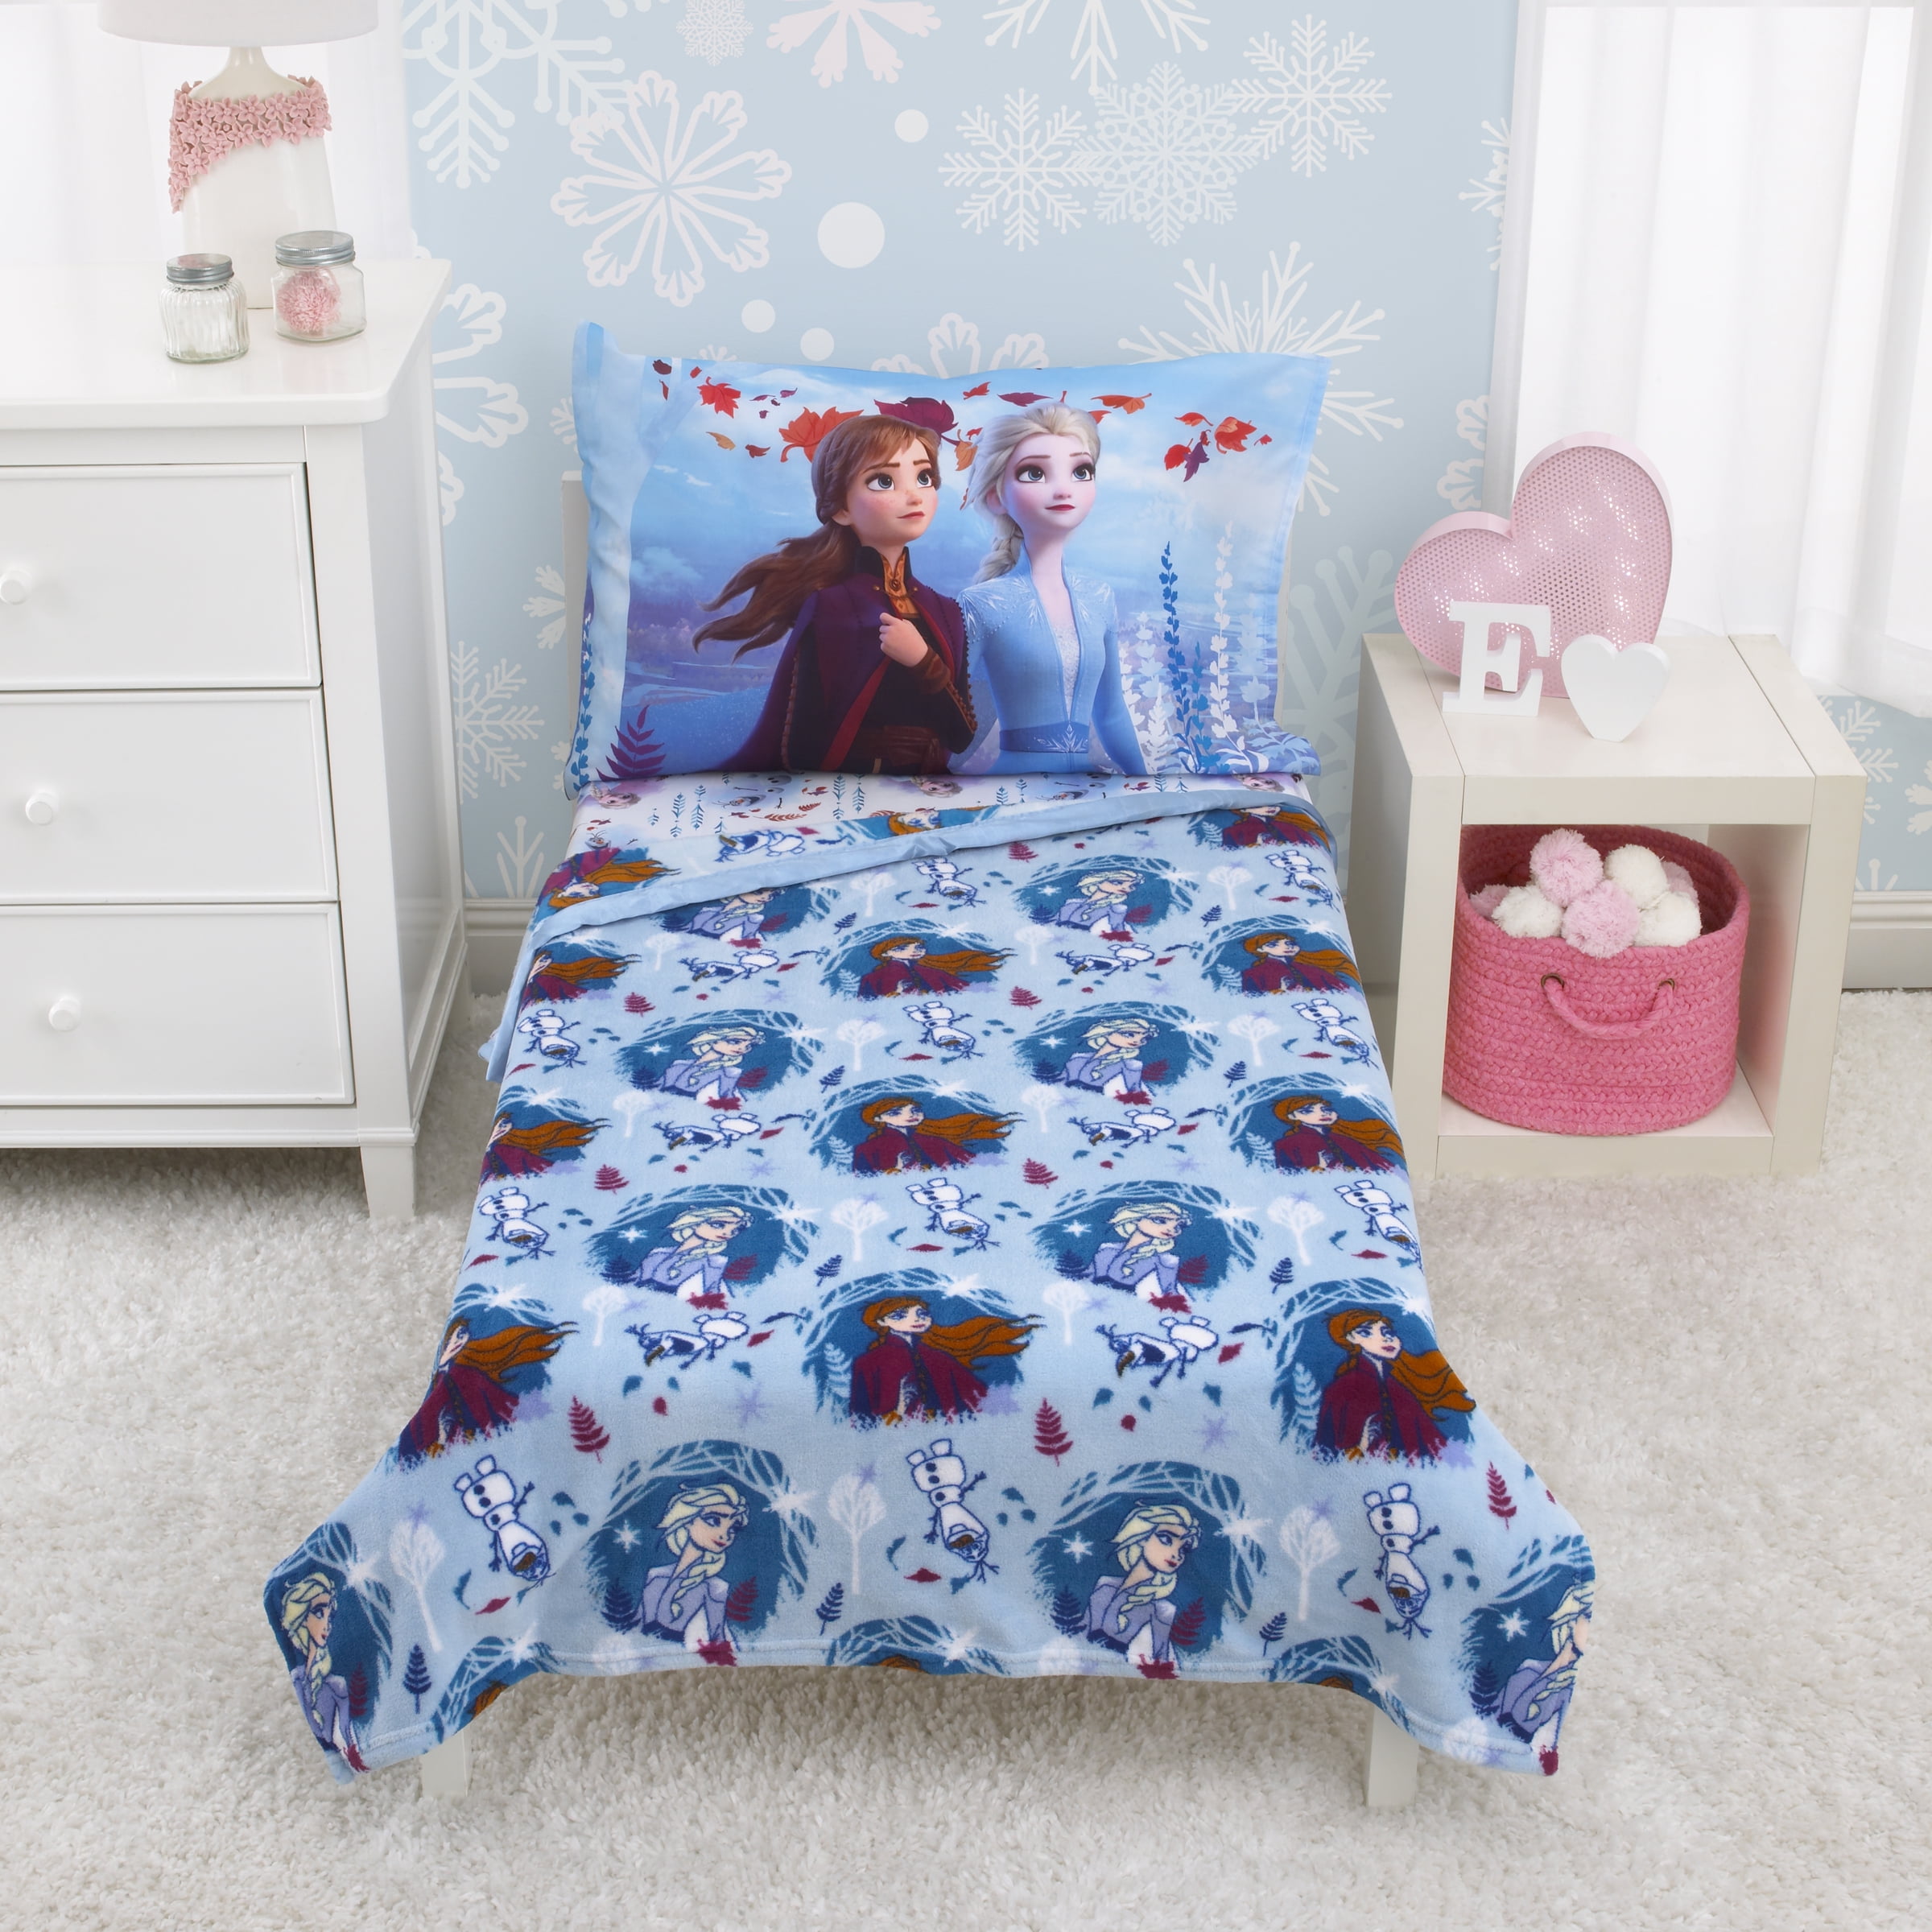 Disney Frozen Olaf Blue Blanket Oversized Twin Blanket 59 x 78 Inches 